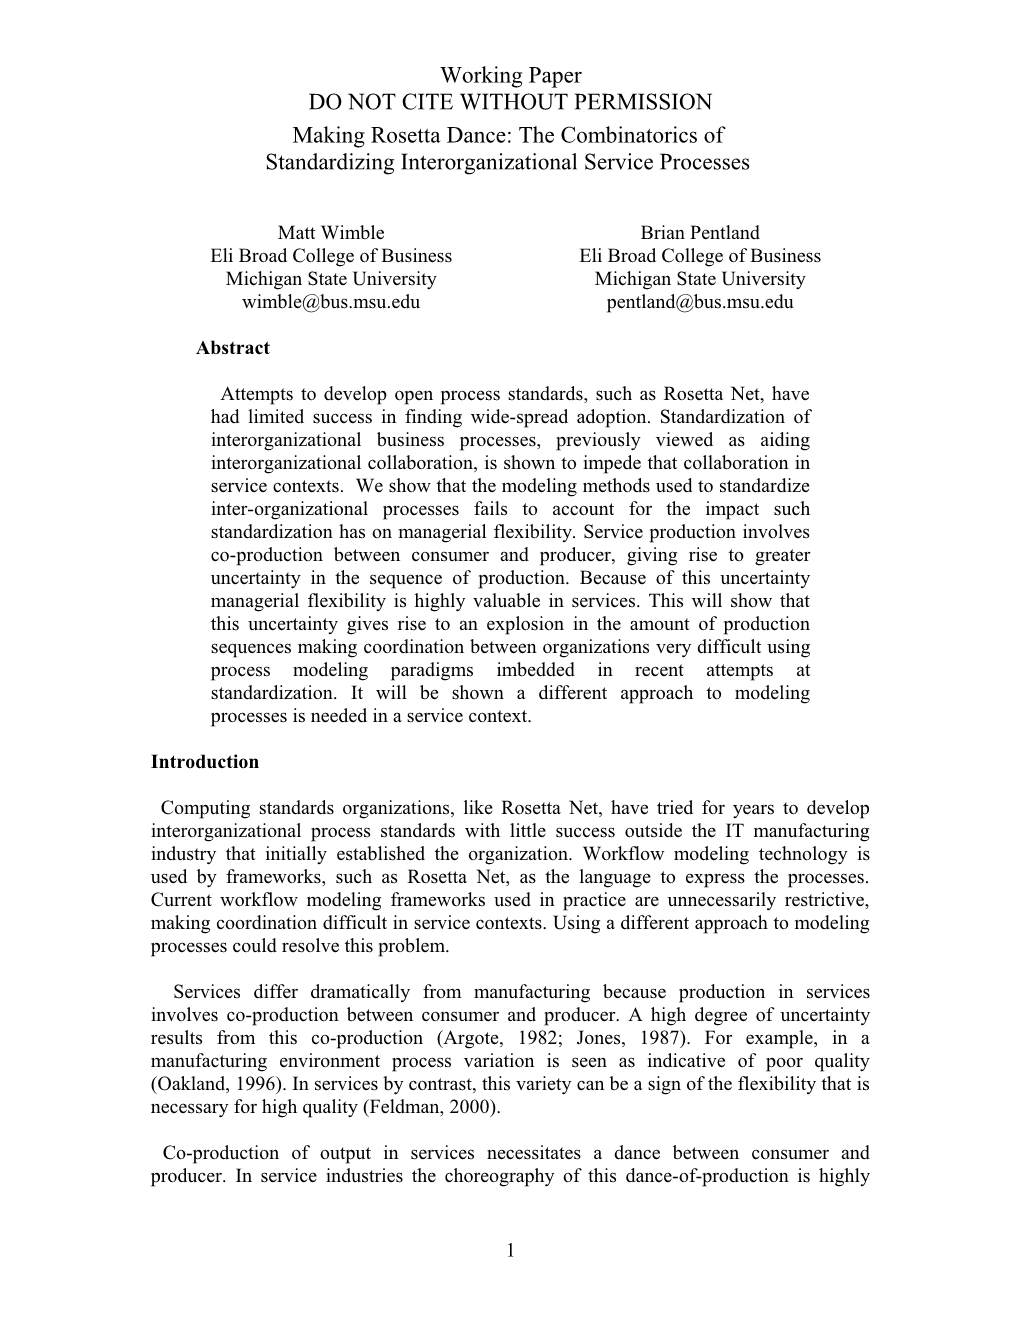 Combinatorial Issues in Interorganizational Process Design in Services